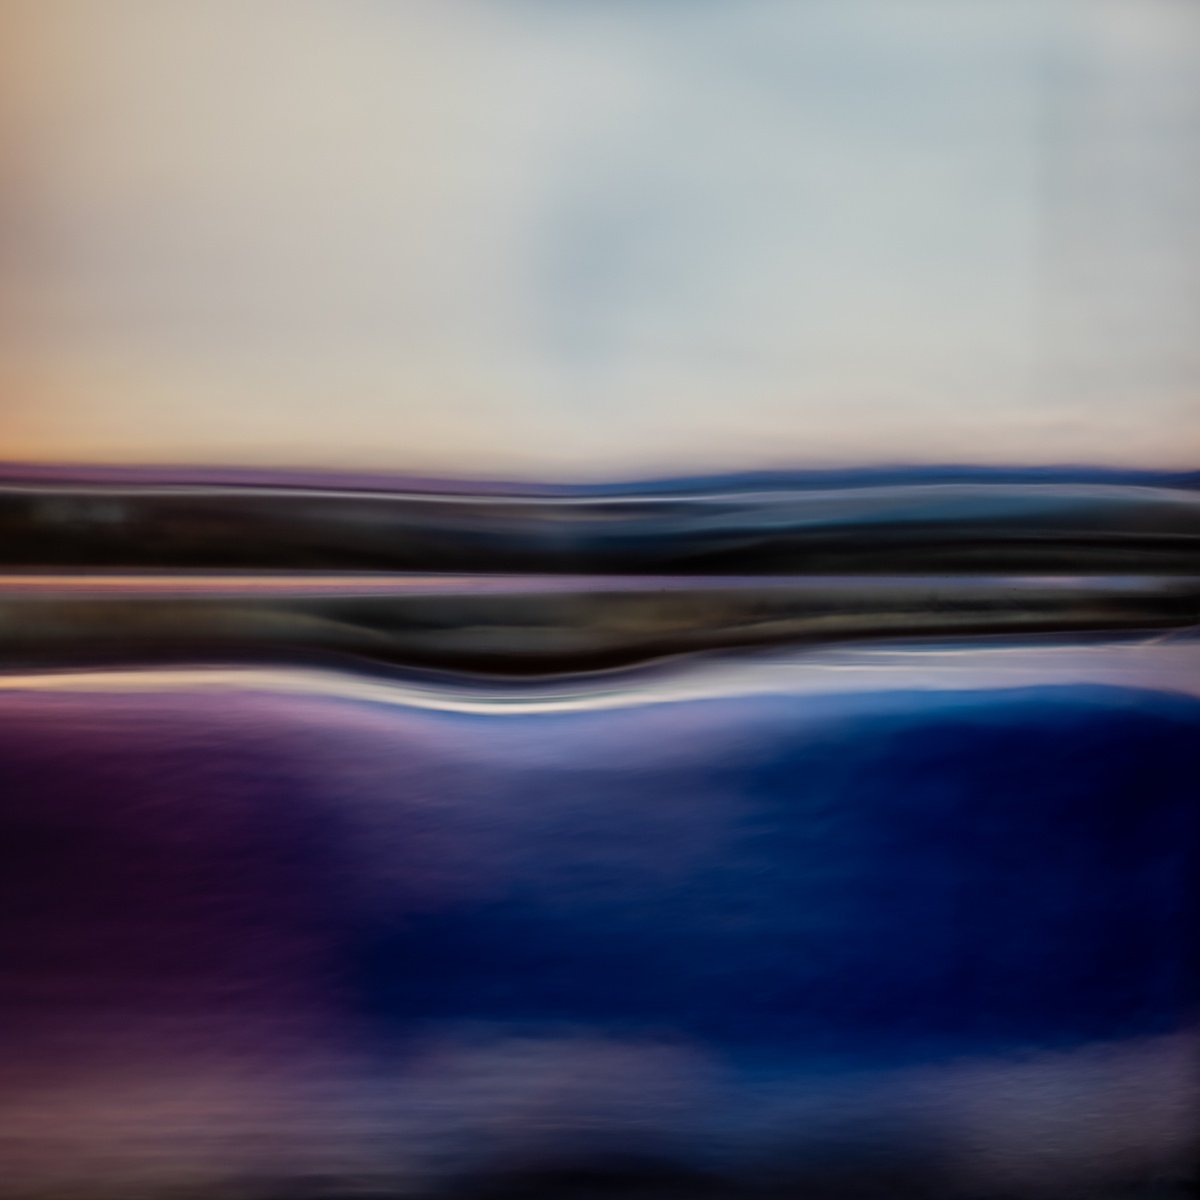 FLUID HORIZON XI - SEASCAPE PHOTOART by Sven Pfrommer